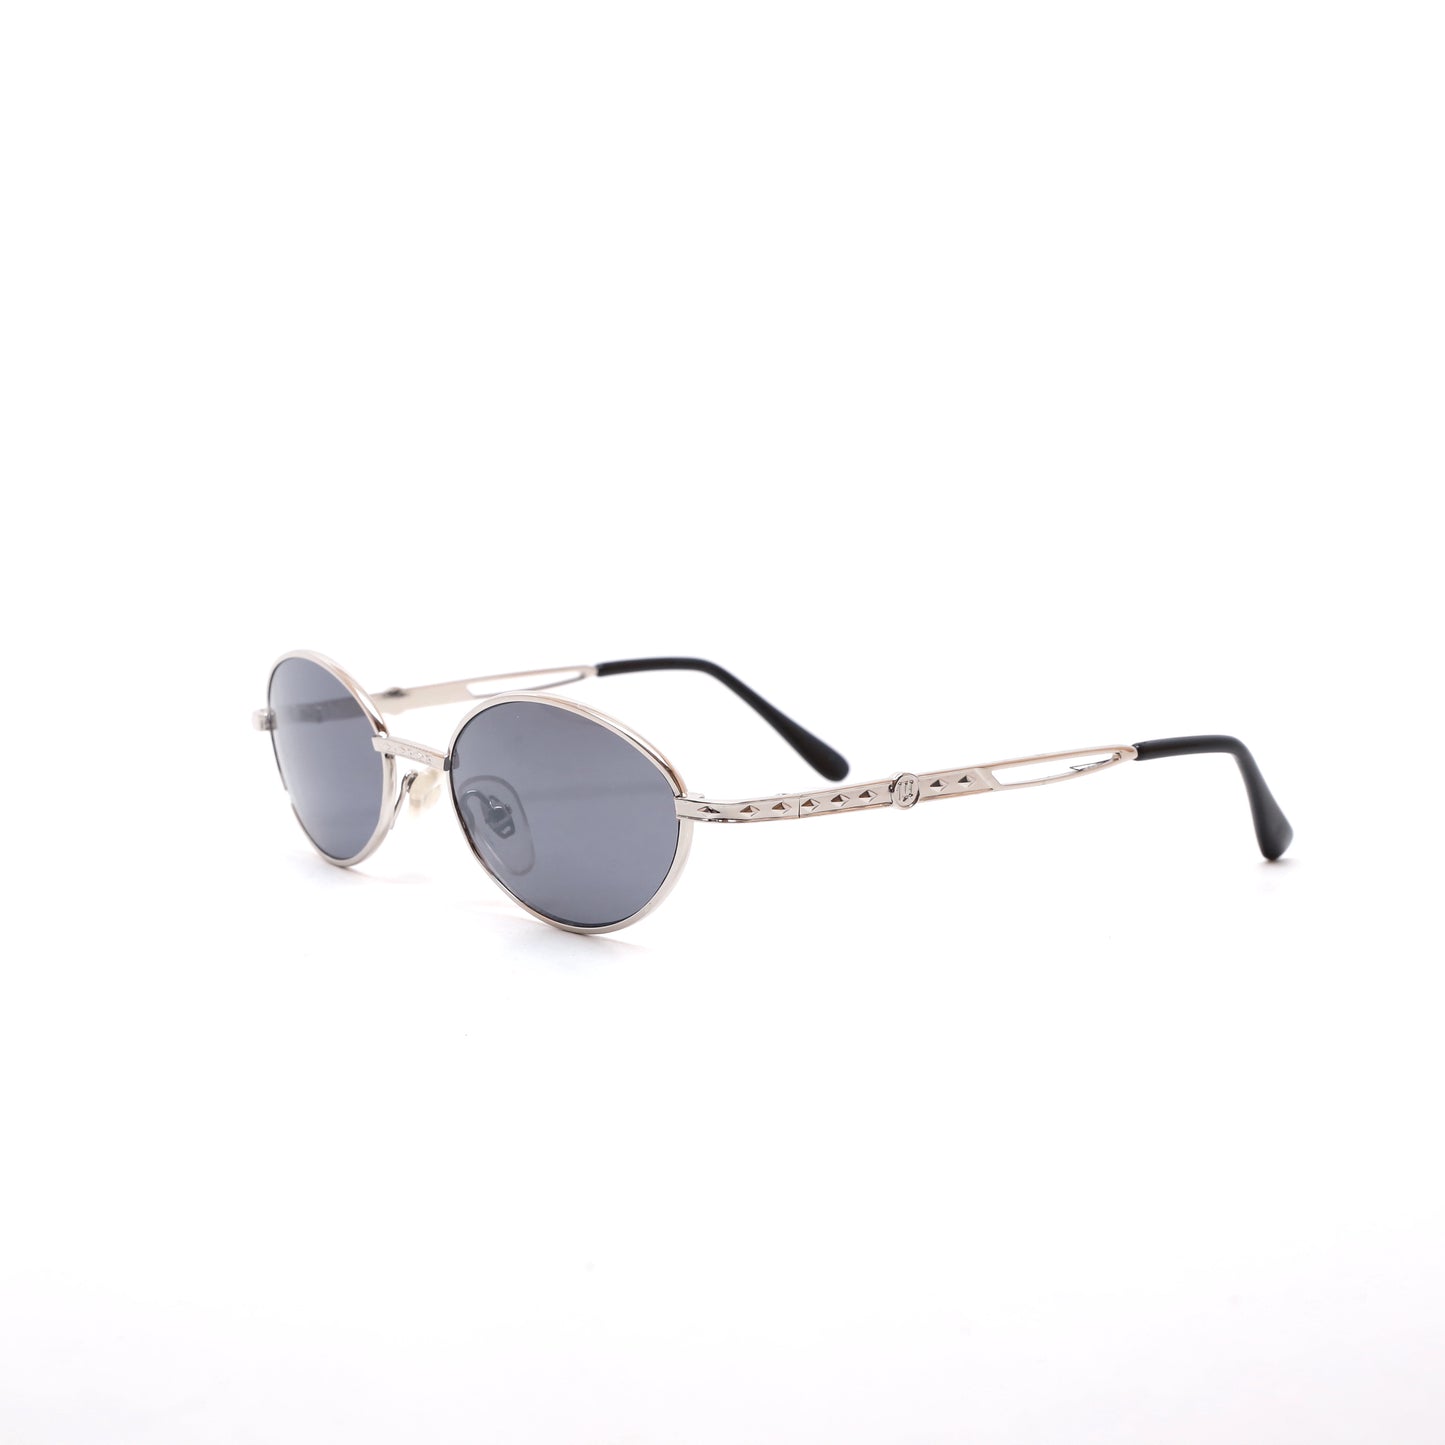 Vintage MINI Small Size 1992 Neo Santa Fe Oval Frame Sunglasses - Silver